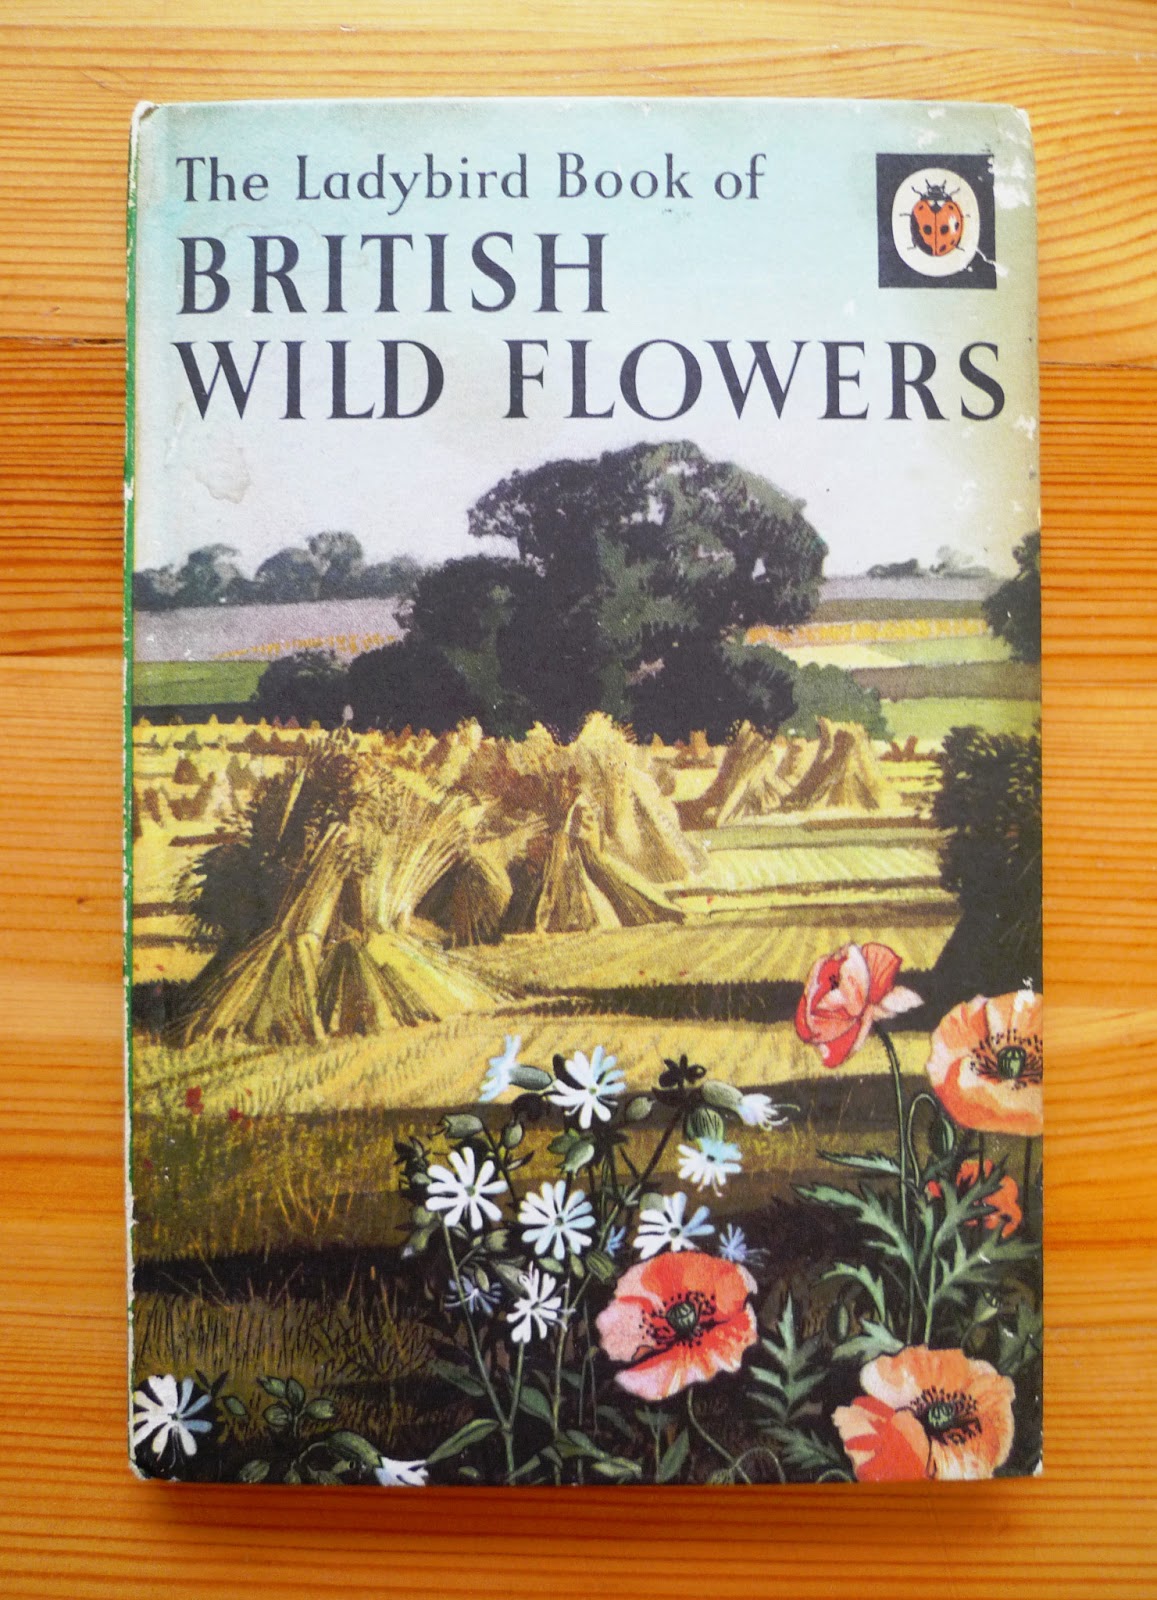 The ladybird book of british wild animals